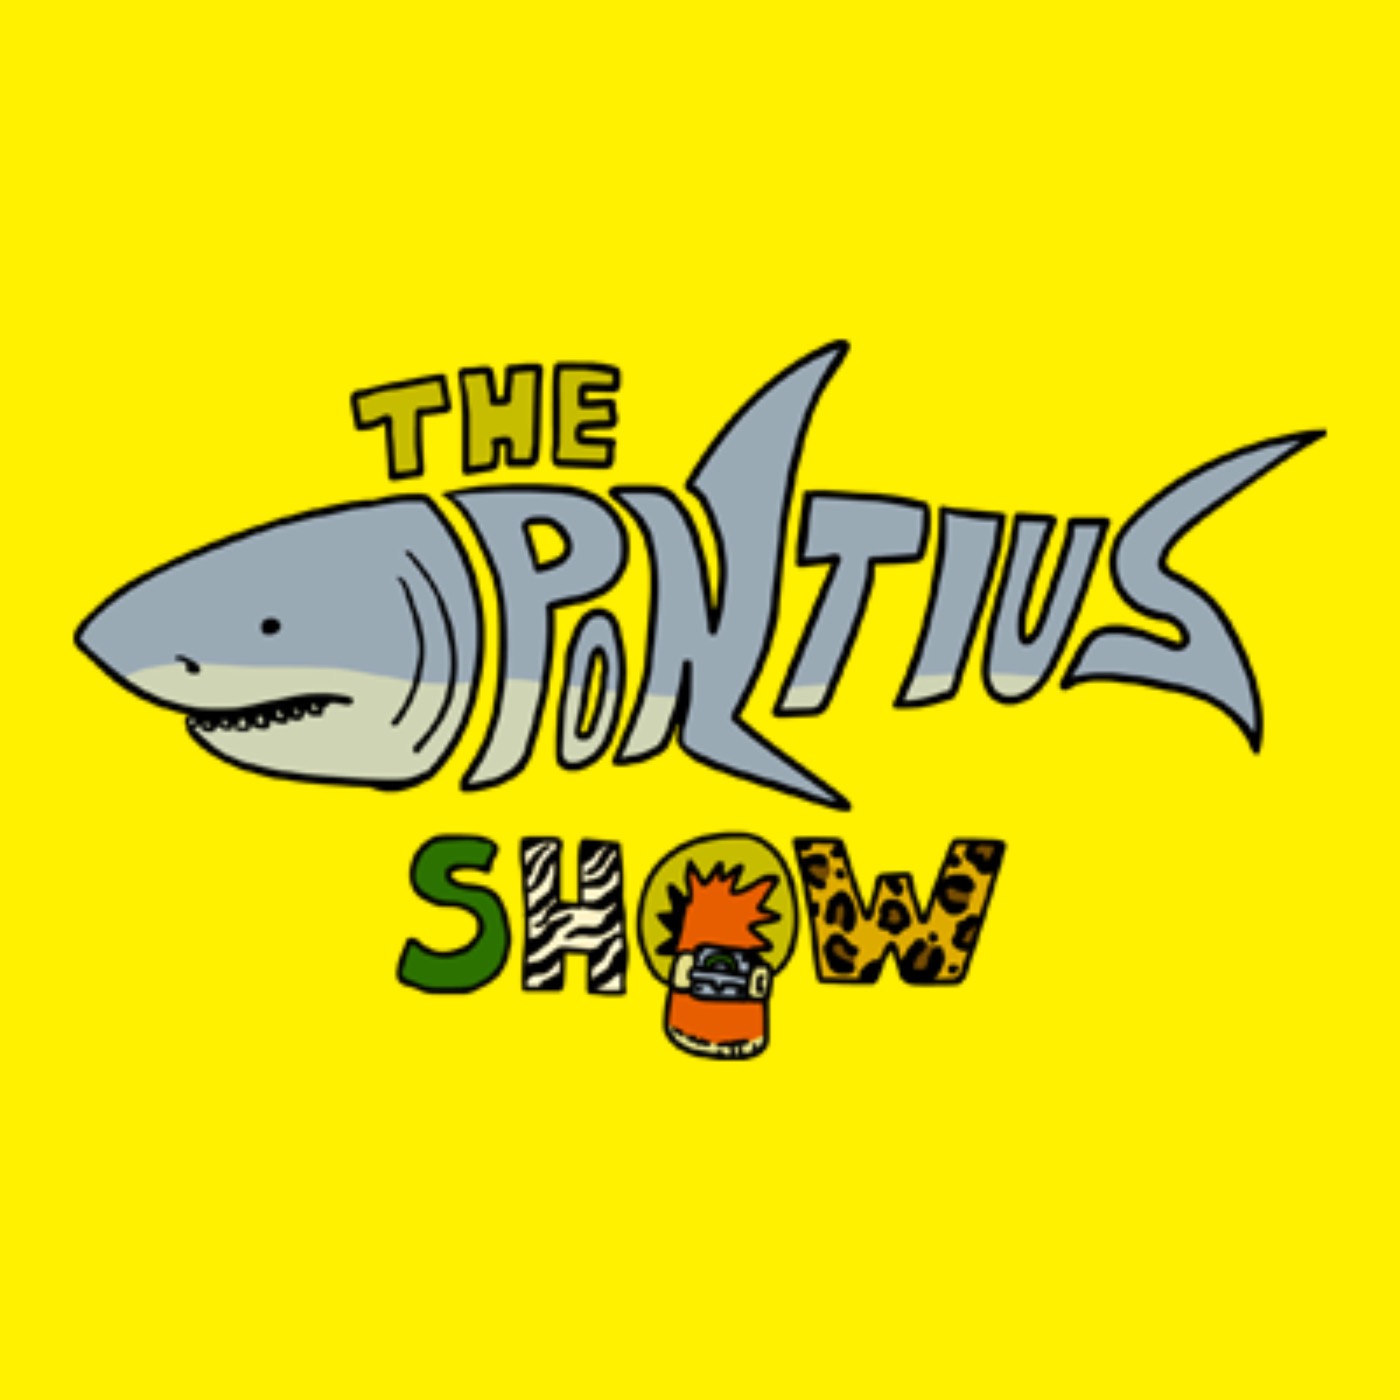 The Pontius Show